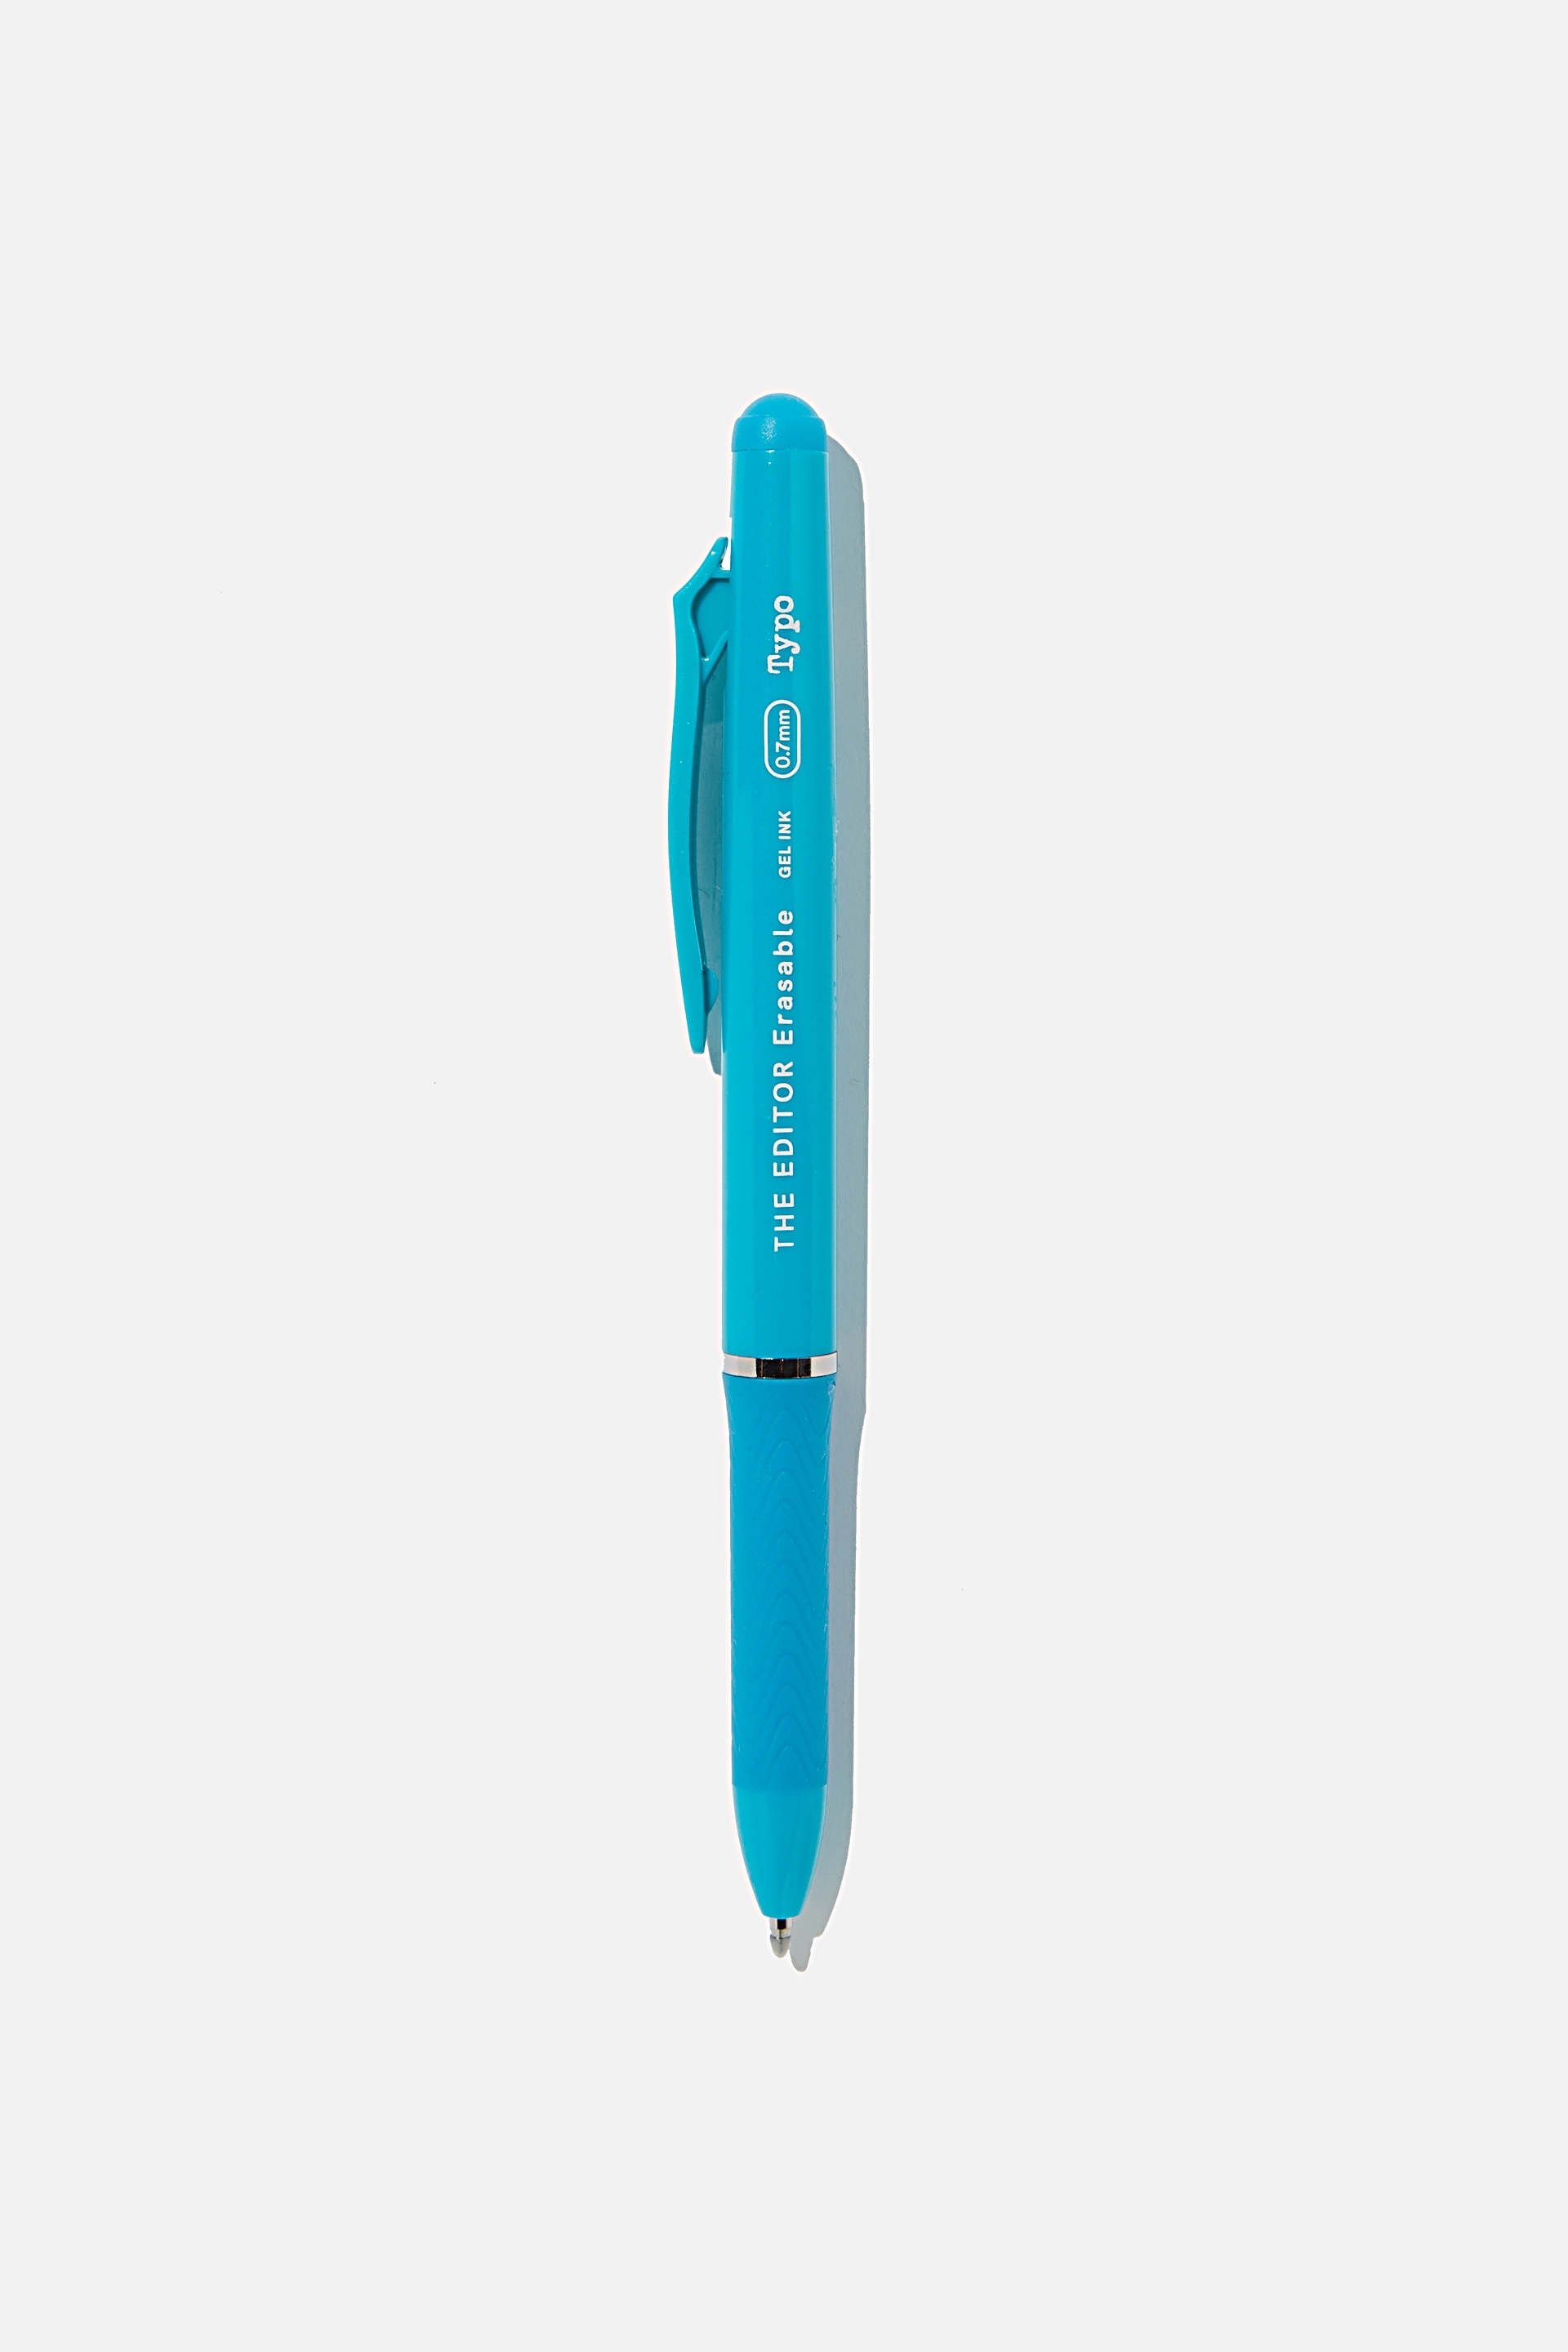 Typo - Wipeout Gel Pen - Aqua blue